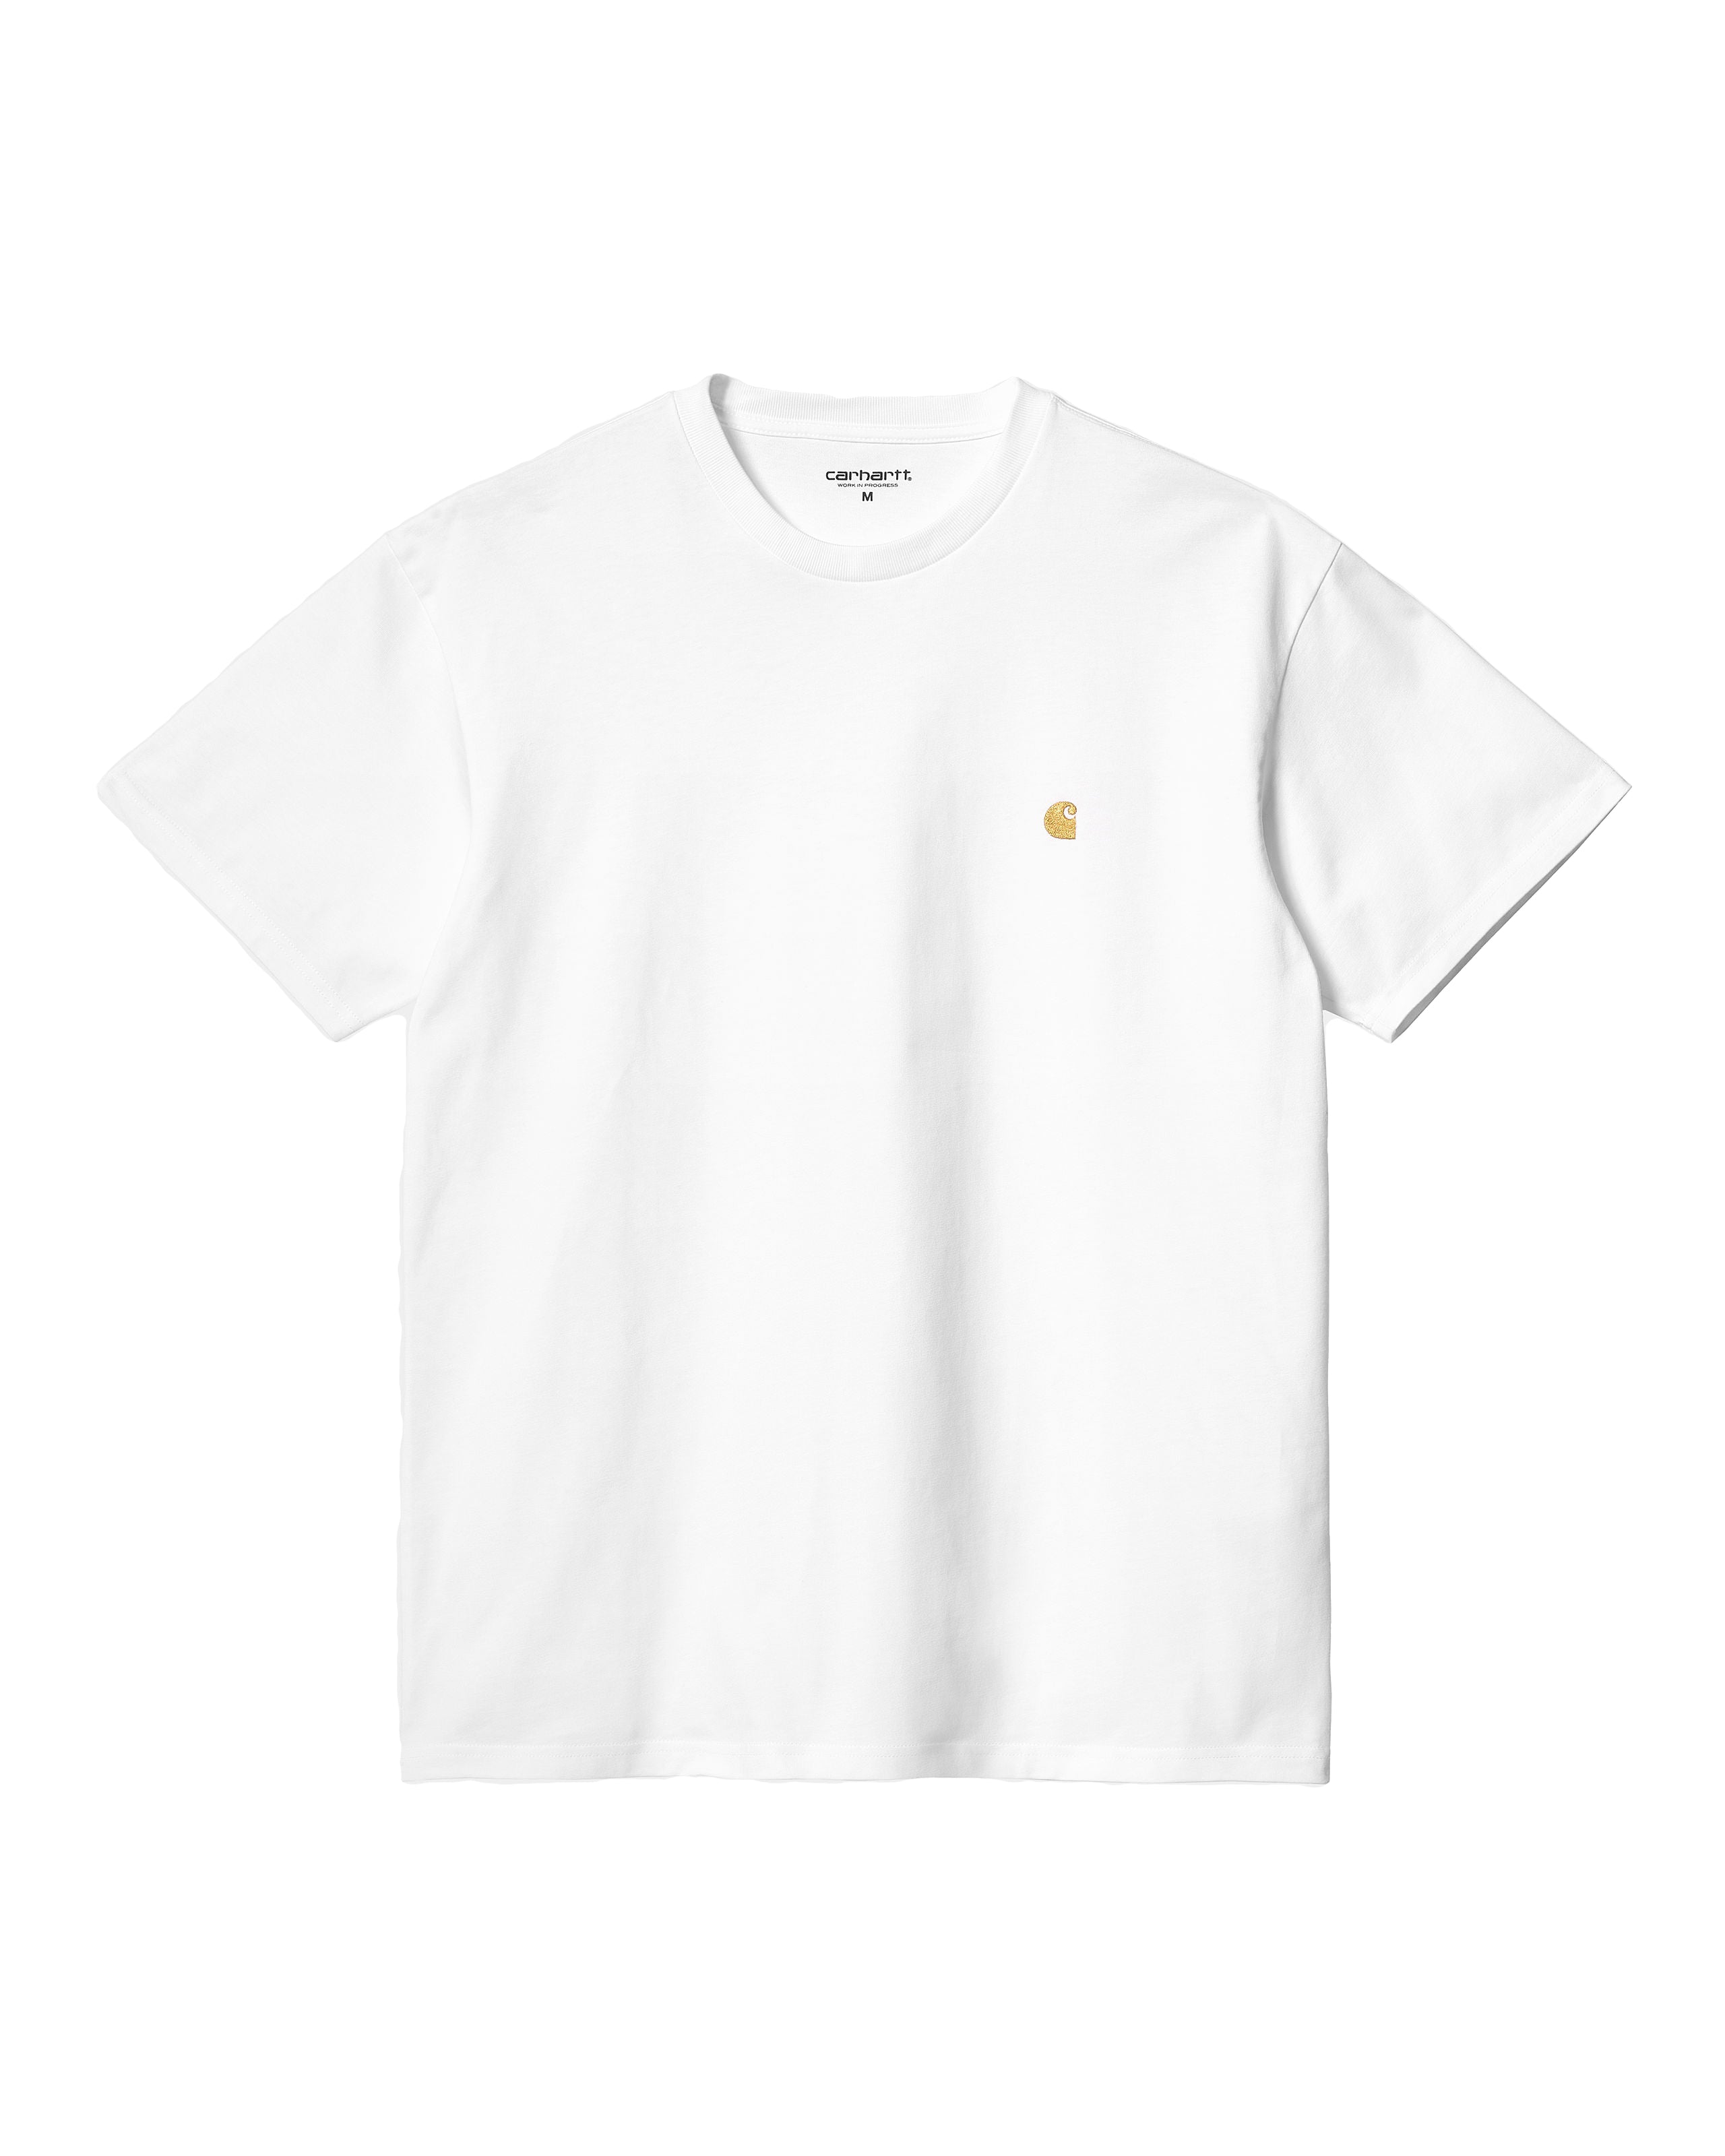 Camiseta SS Chase - White/Gold